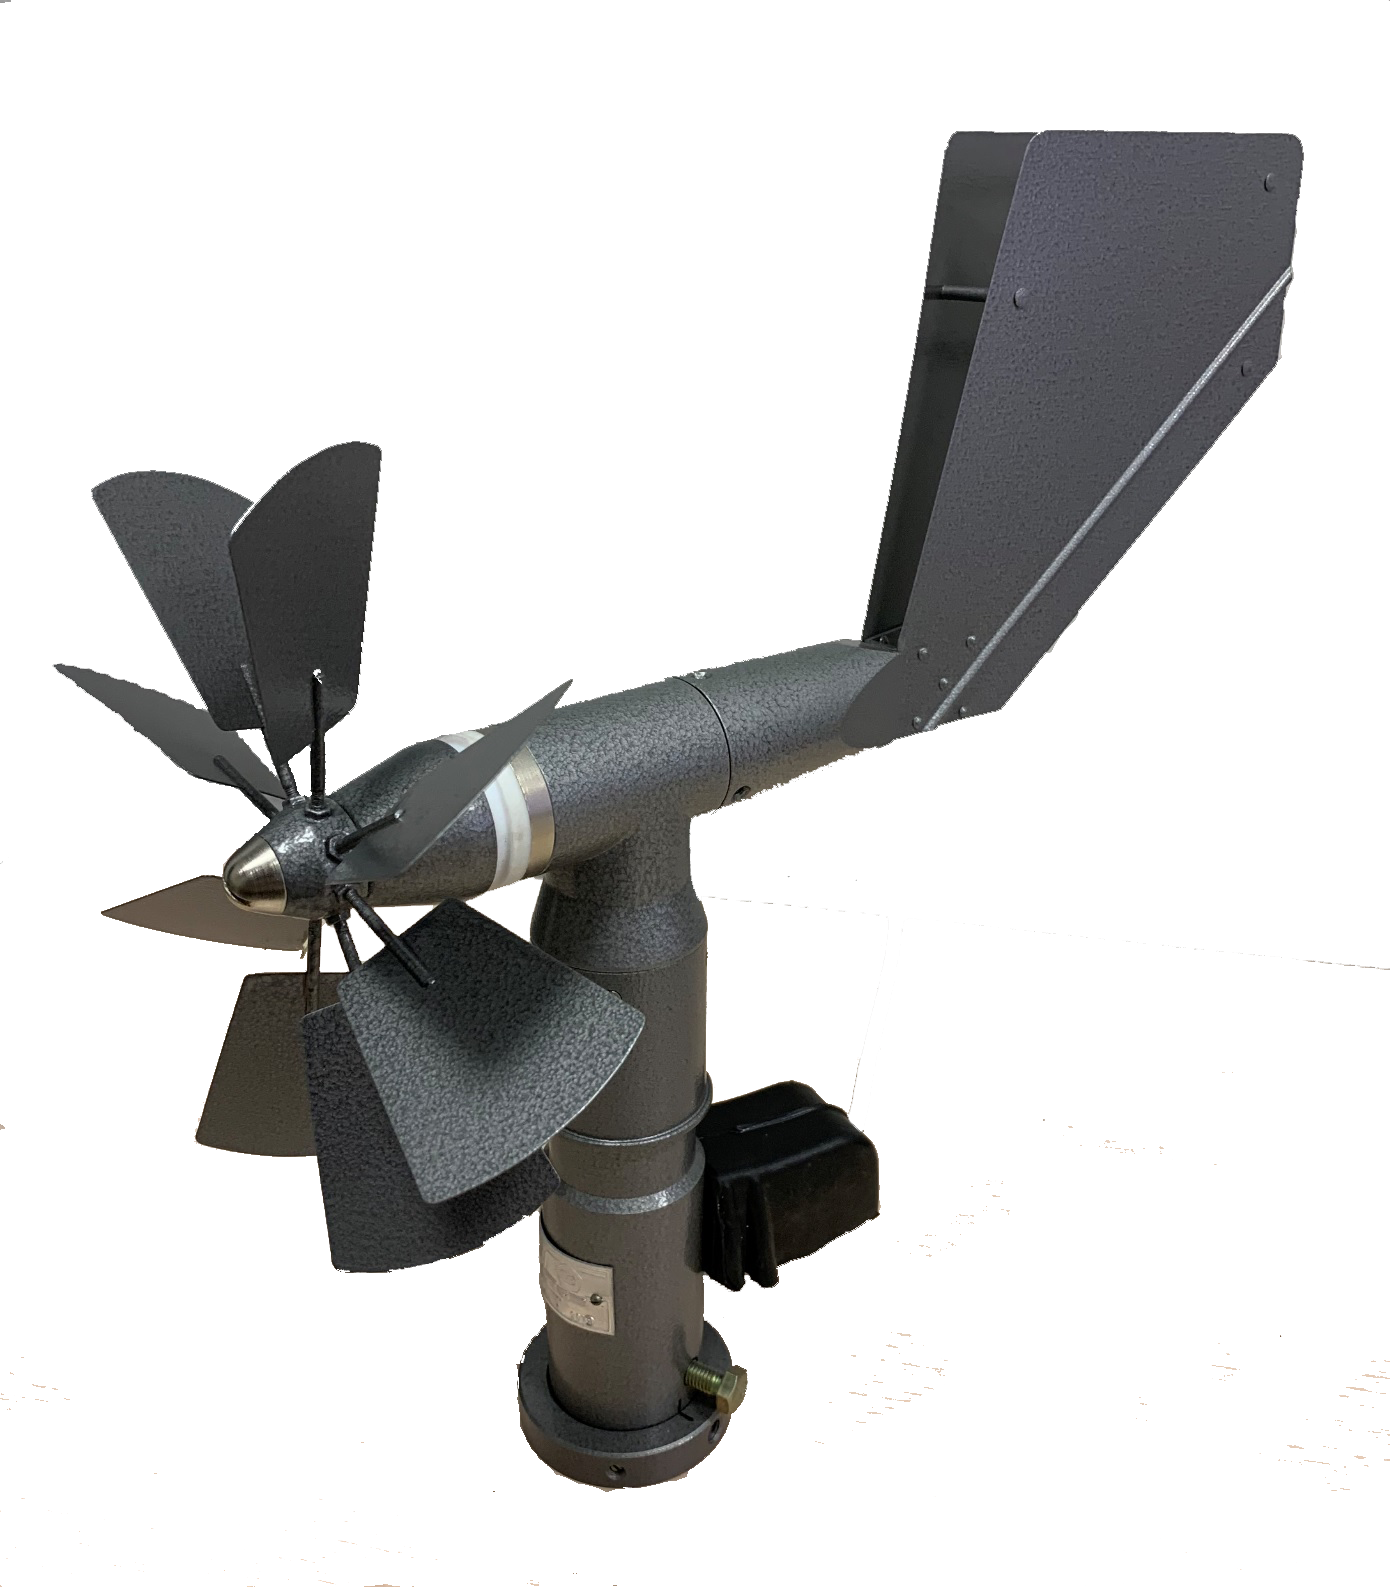 М-127 датчик ветра